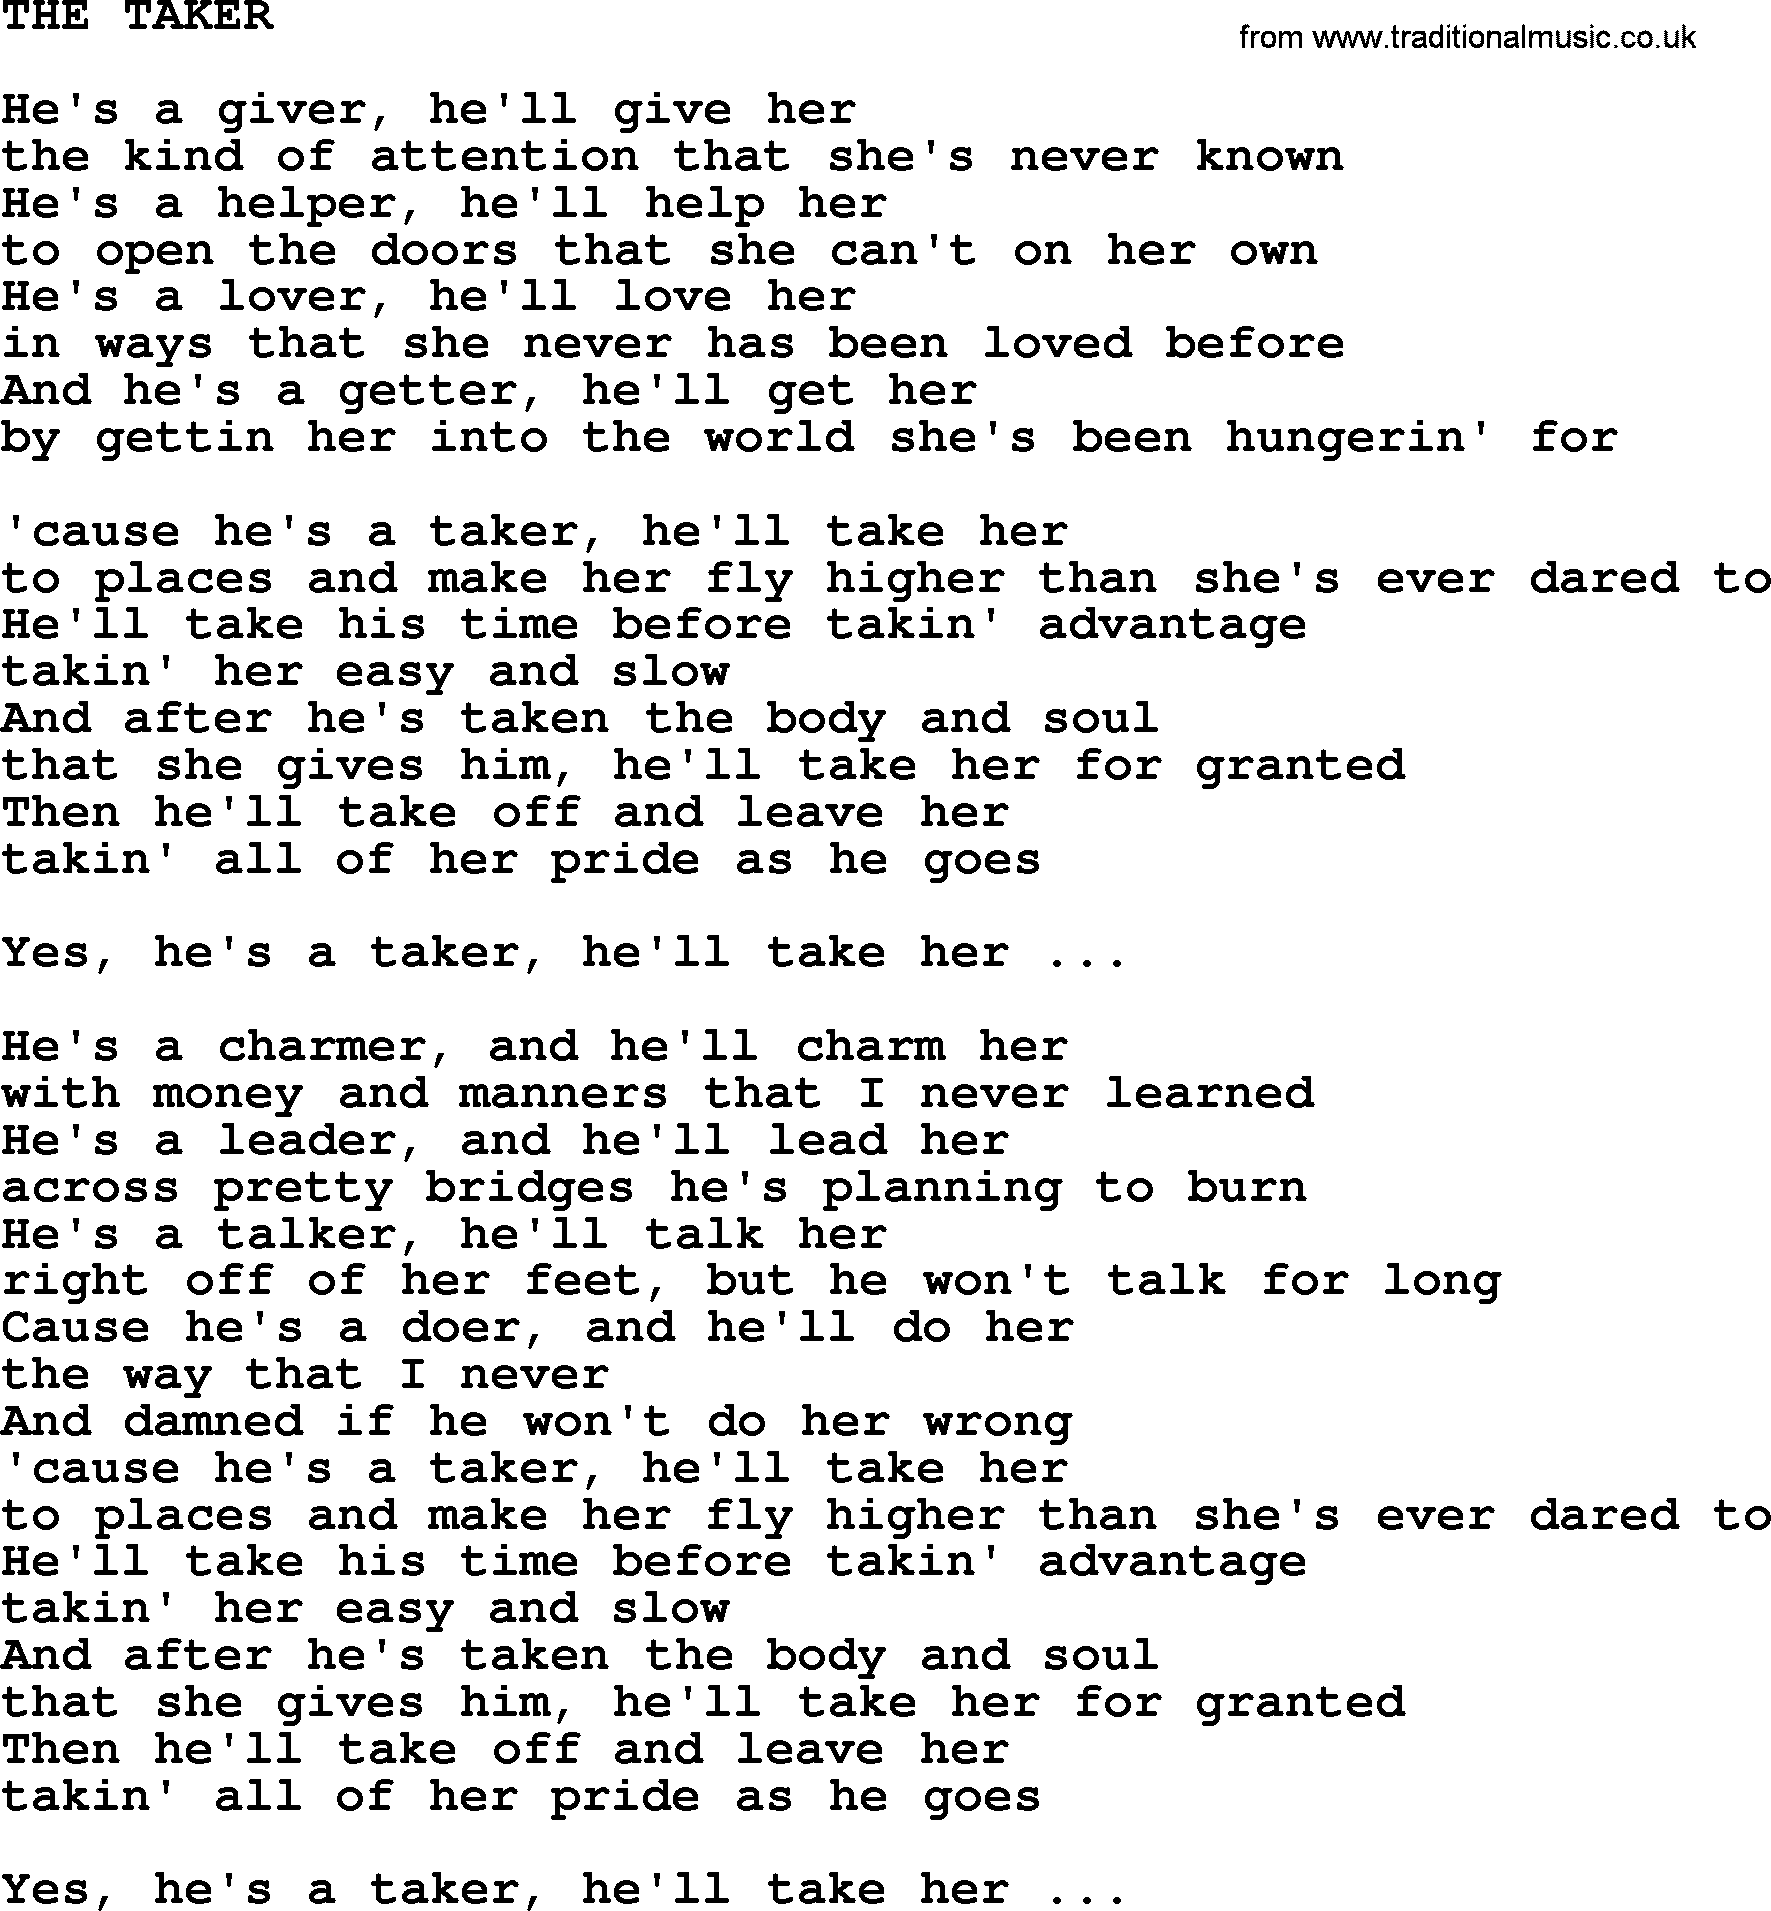 Kris Kristofferson song: The Taker lyrics